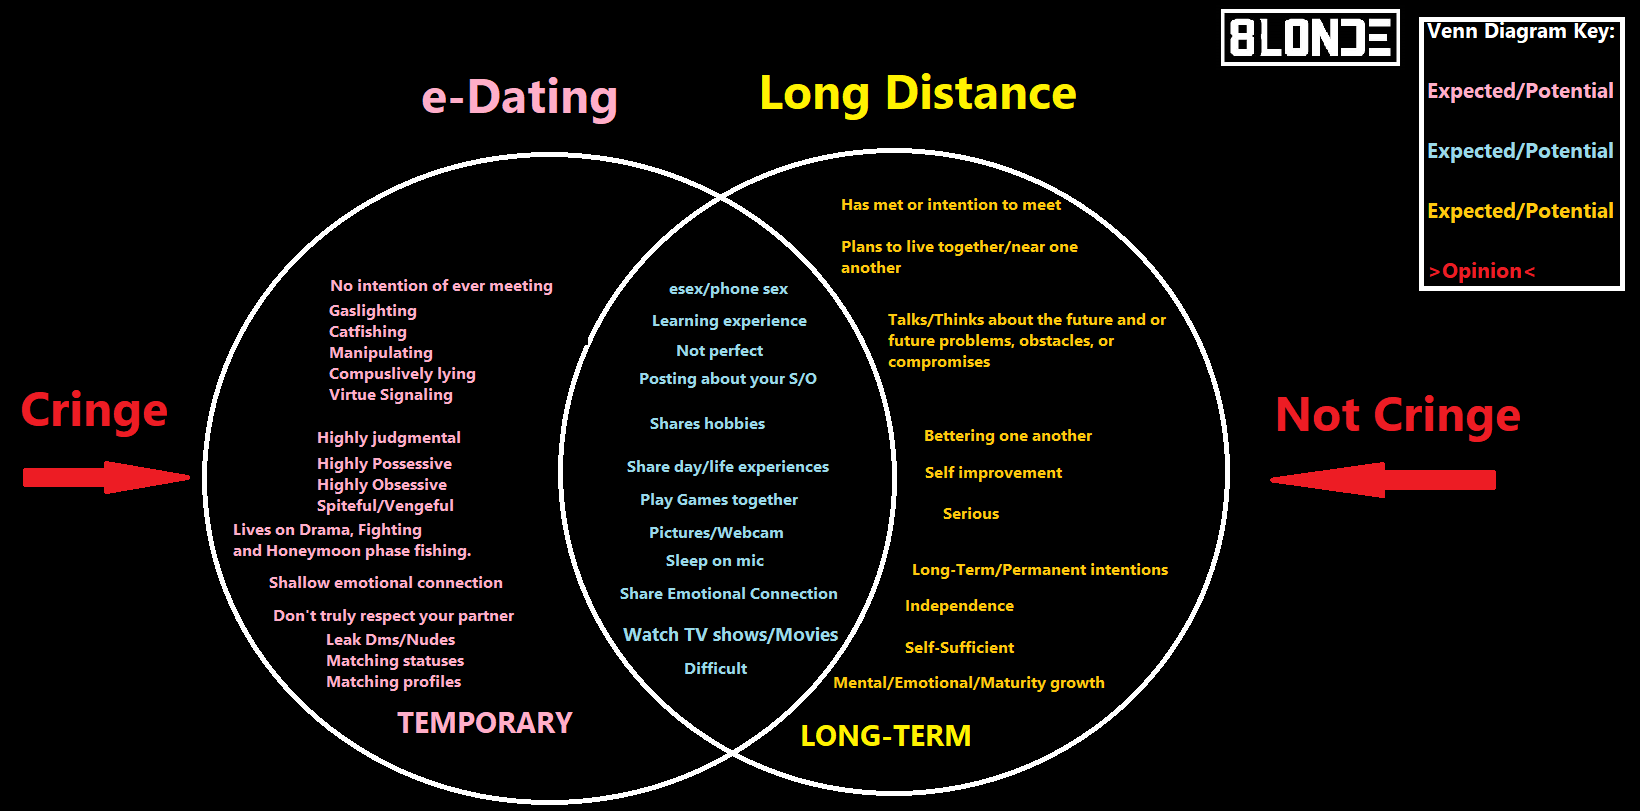 Edating Vs Long Distance Relationship